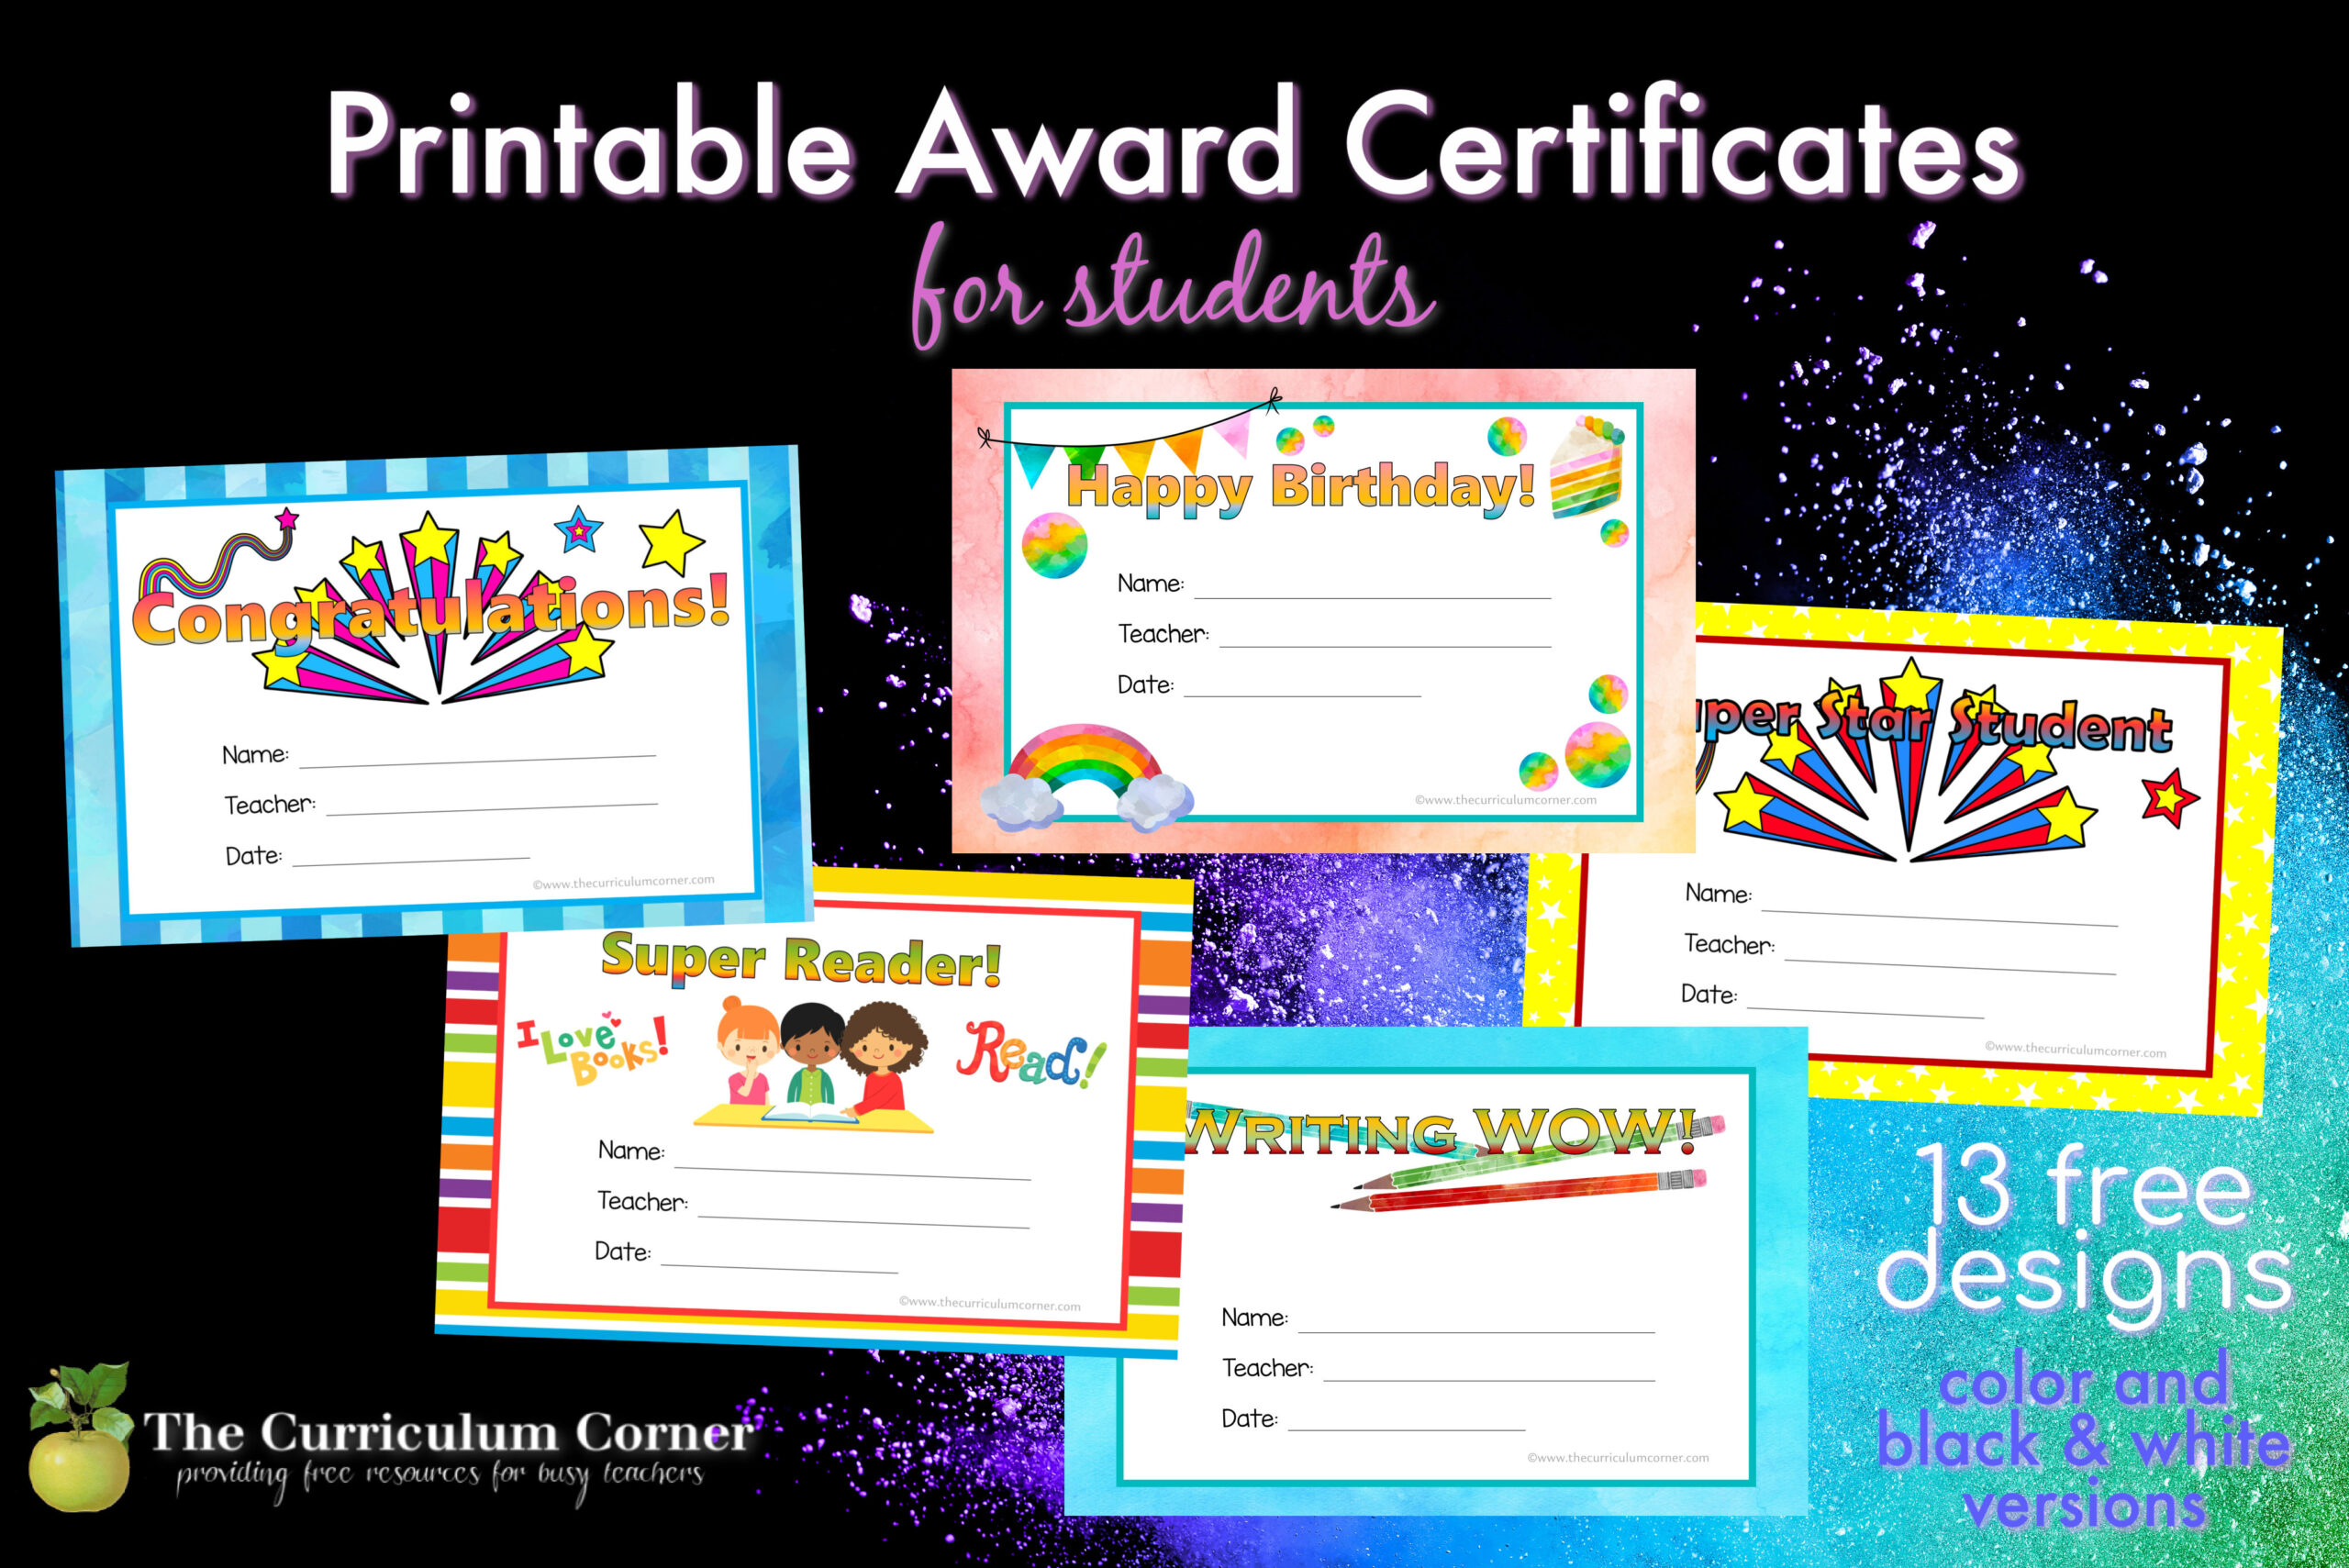 printable-award-certificates-the-curriculum-corner-123